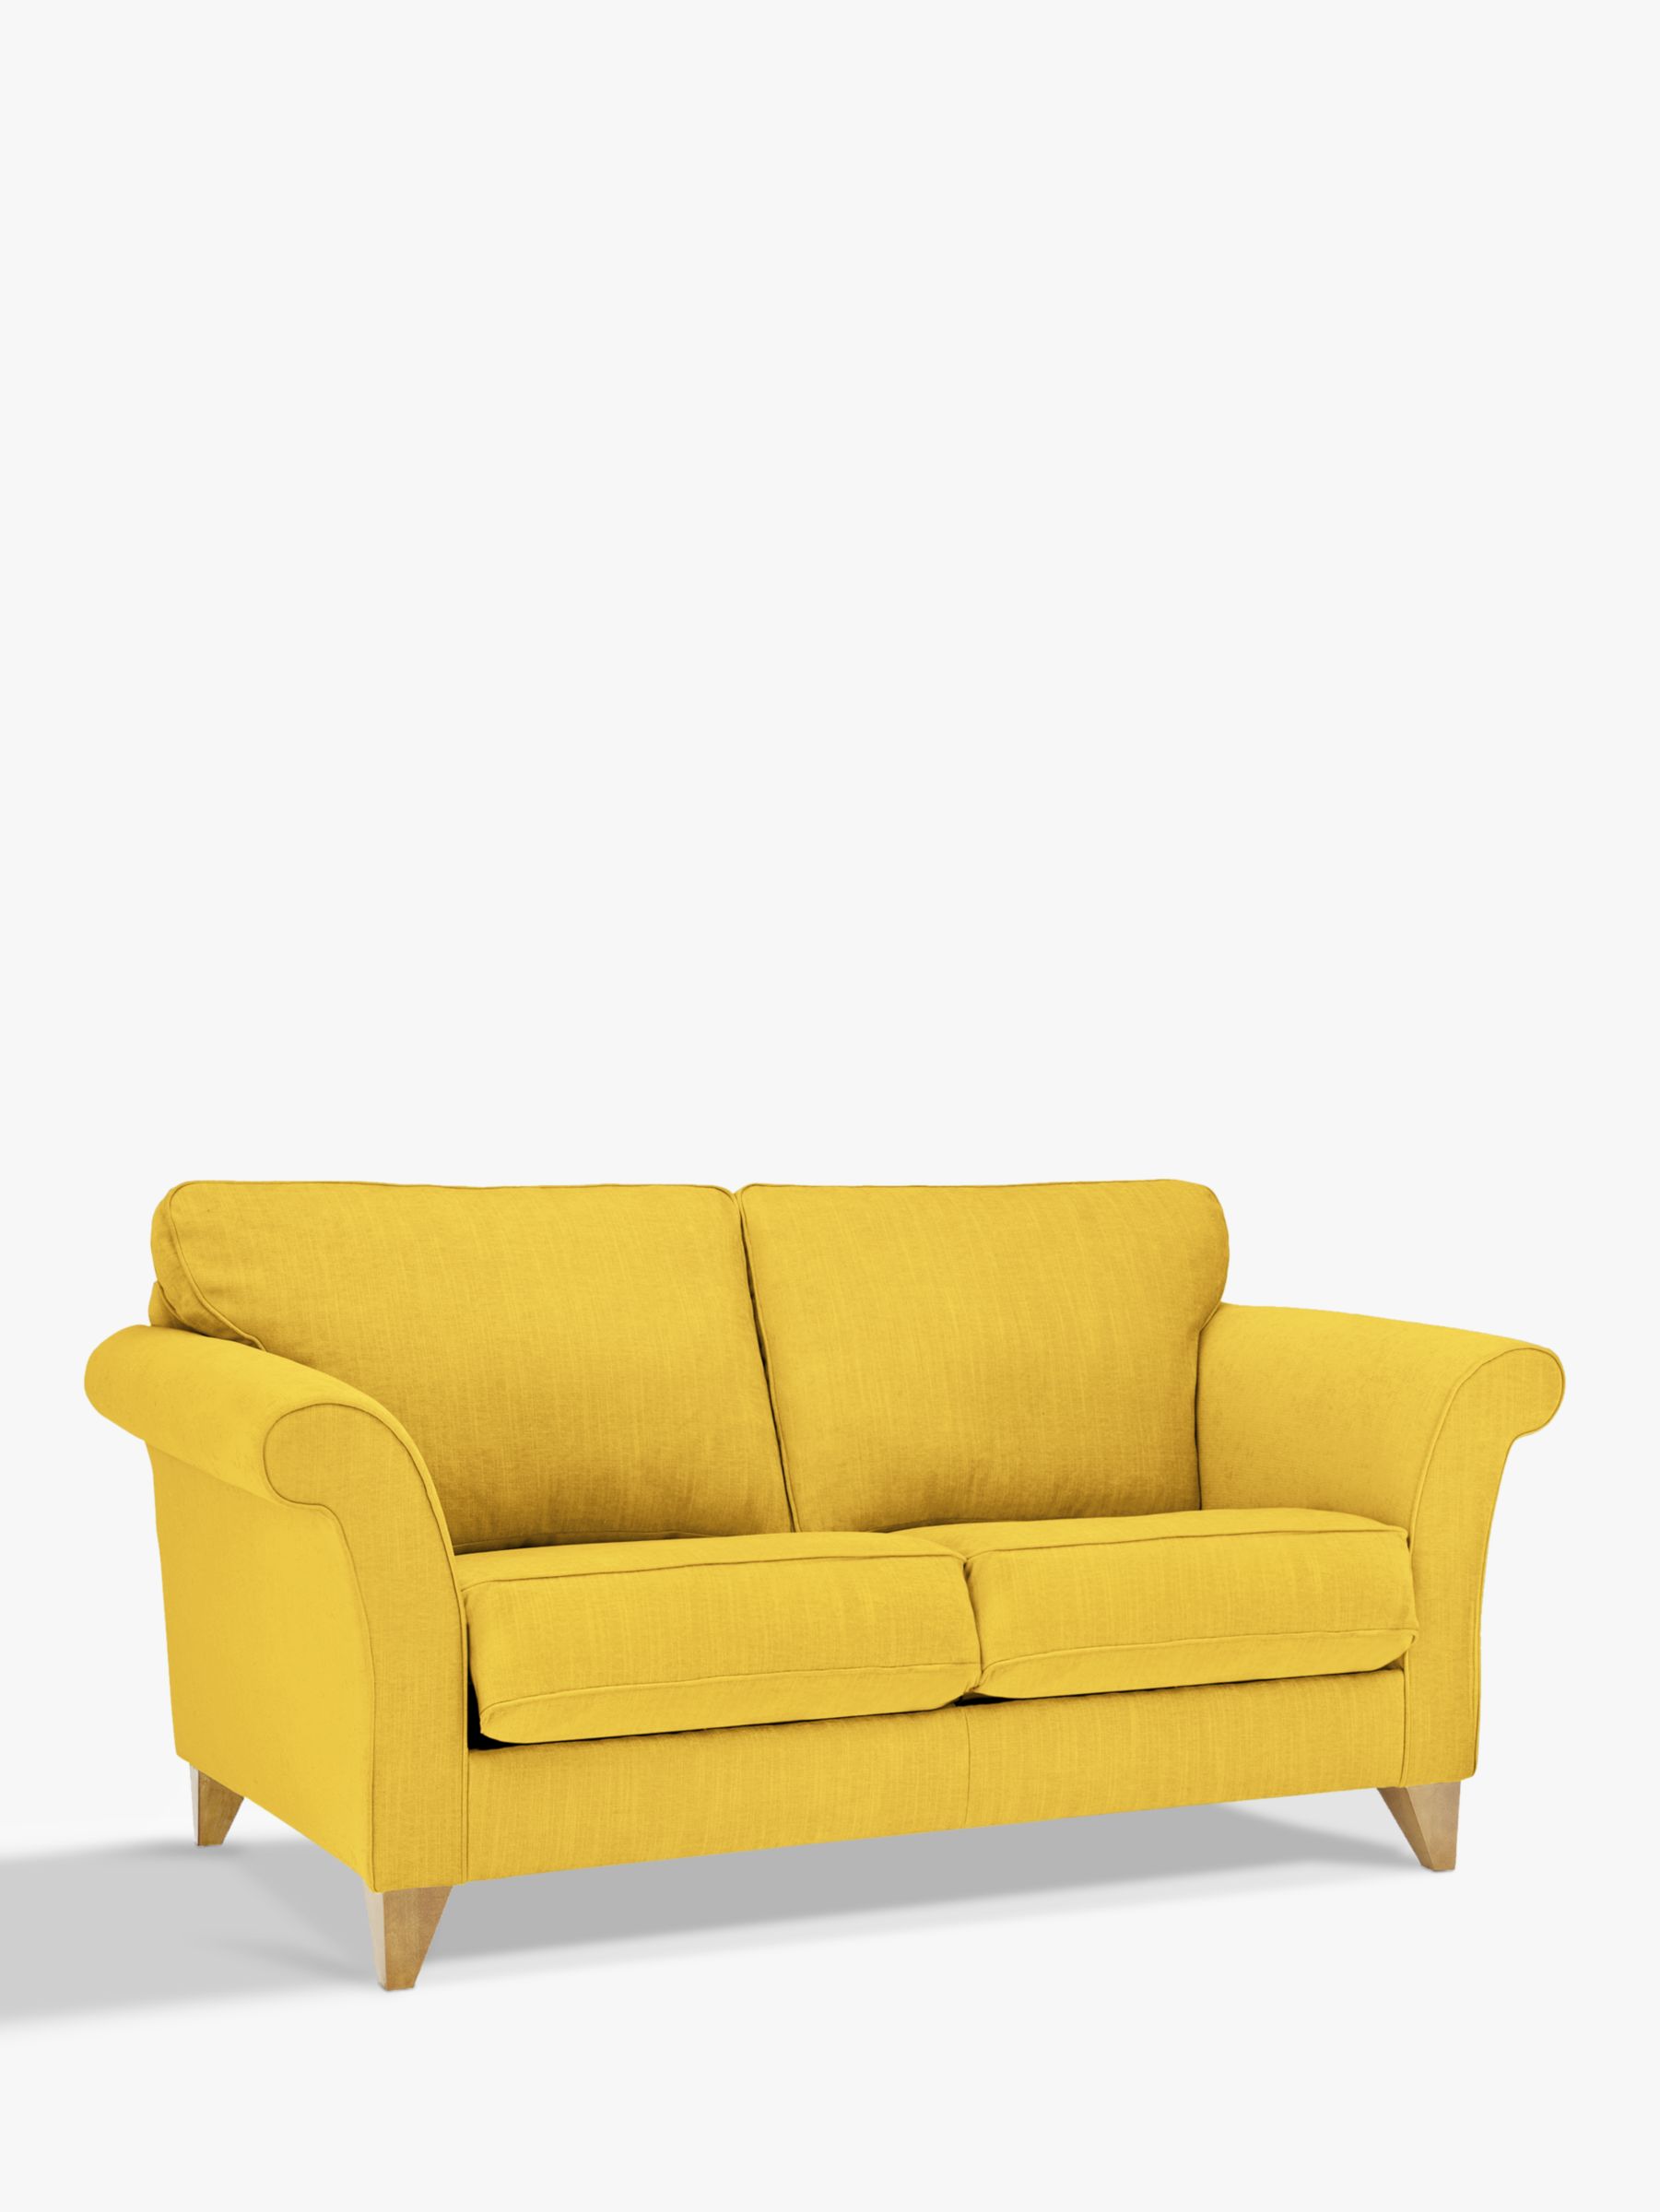 John Lewis & Partners Charlotte Medium 2 Seater Sofa, Light Leg